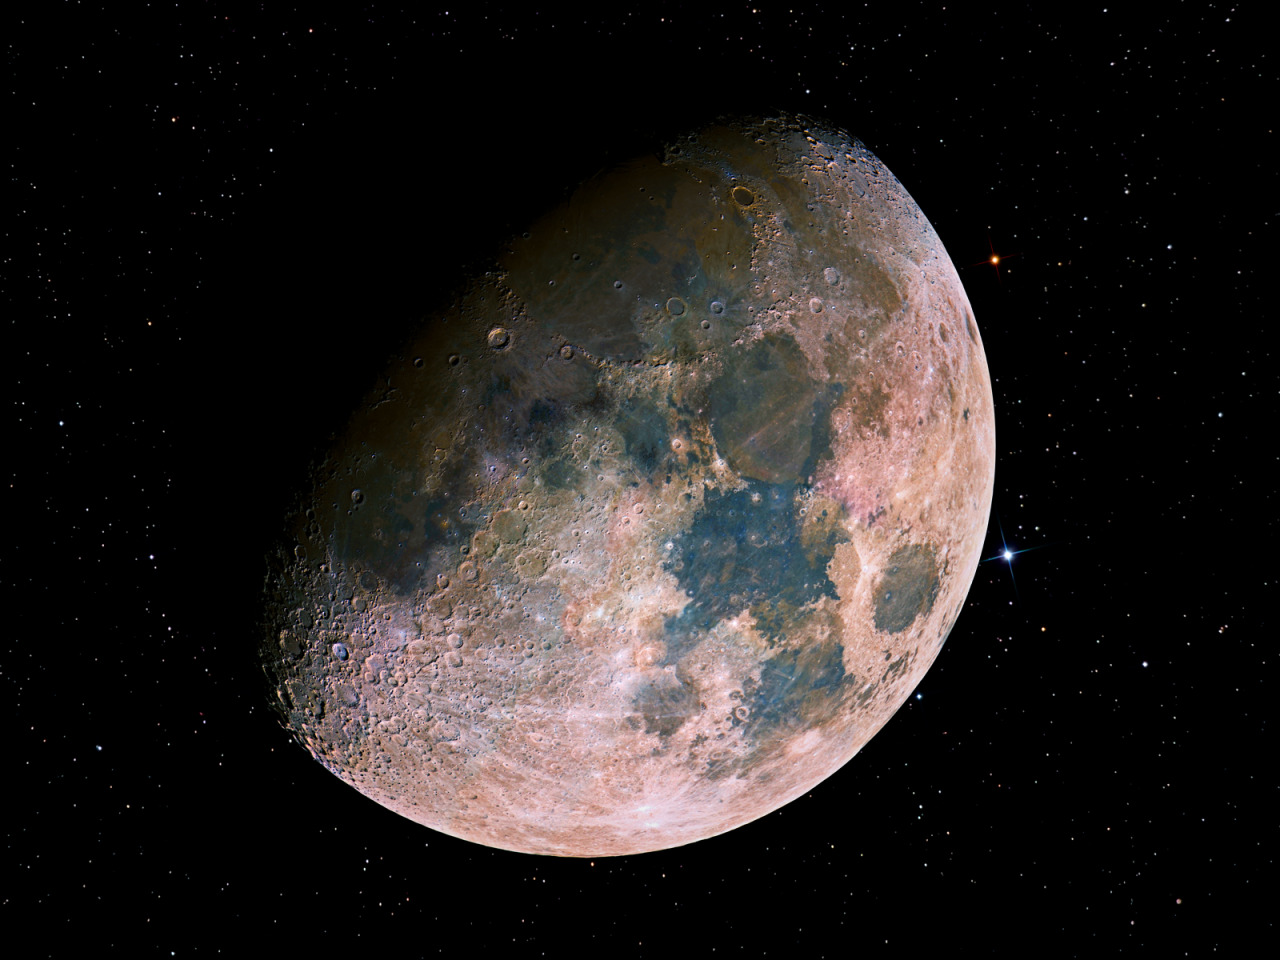  MOON MOSAIC — A gorgeous image of the Moon from Noel Carboni via NASA: “No single